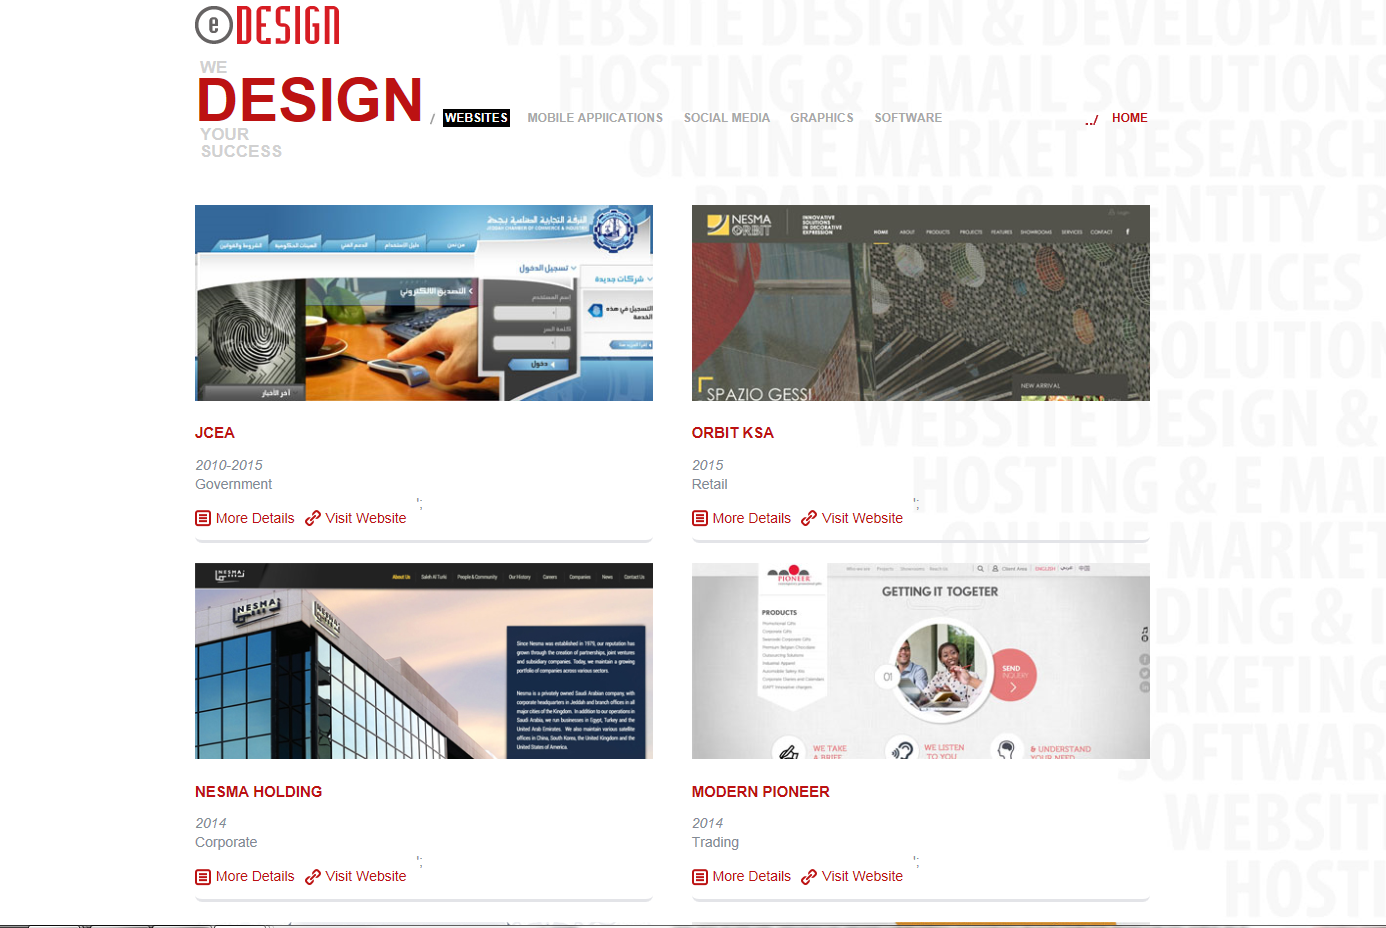 eDesign webpage